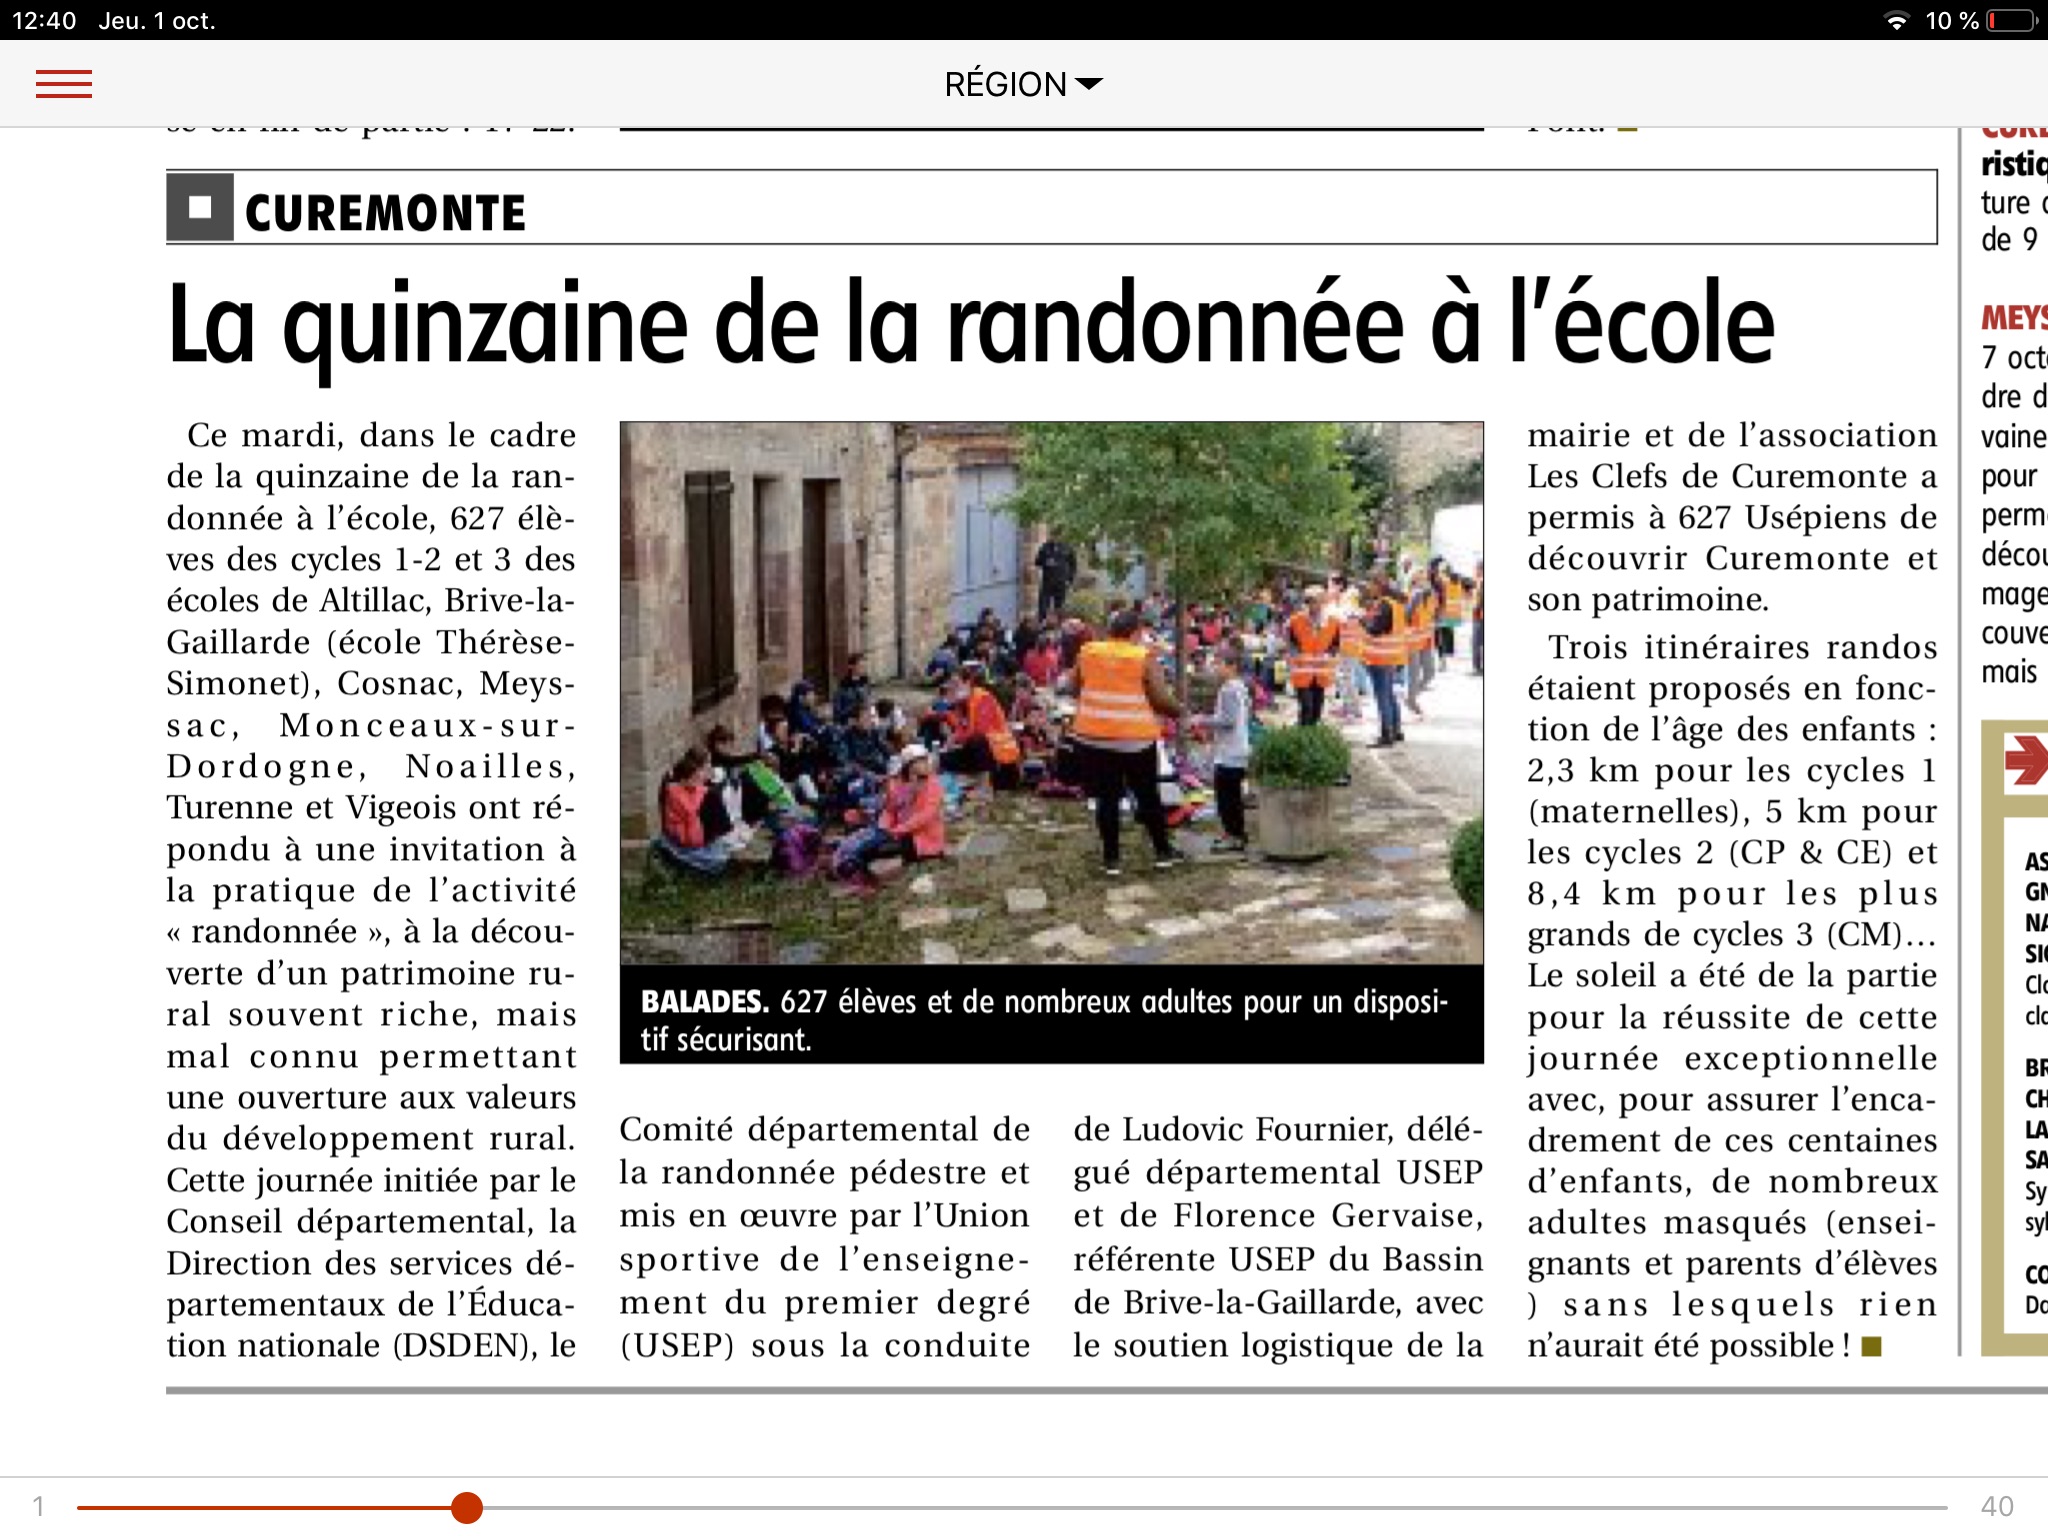 Article_de_Presse_Curemonte.jpeg